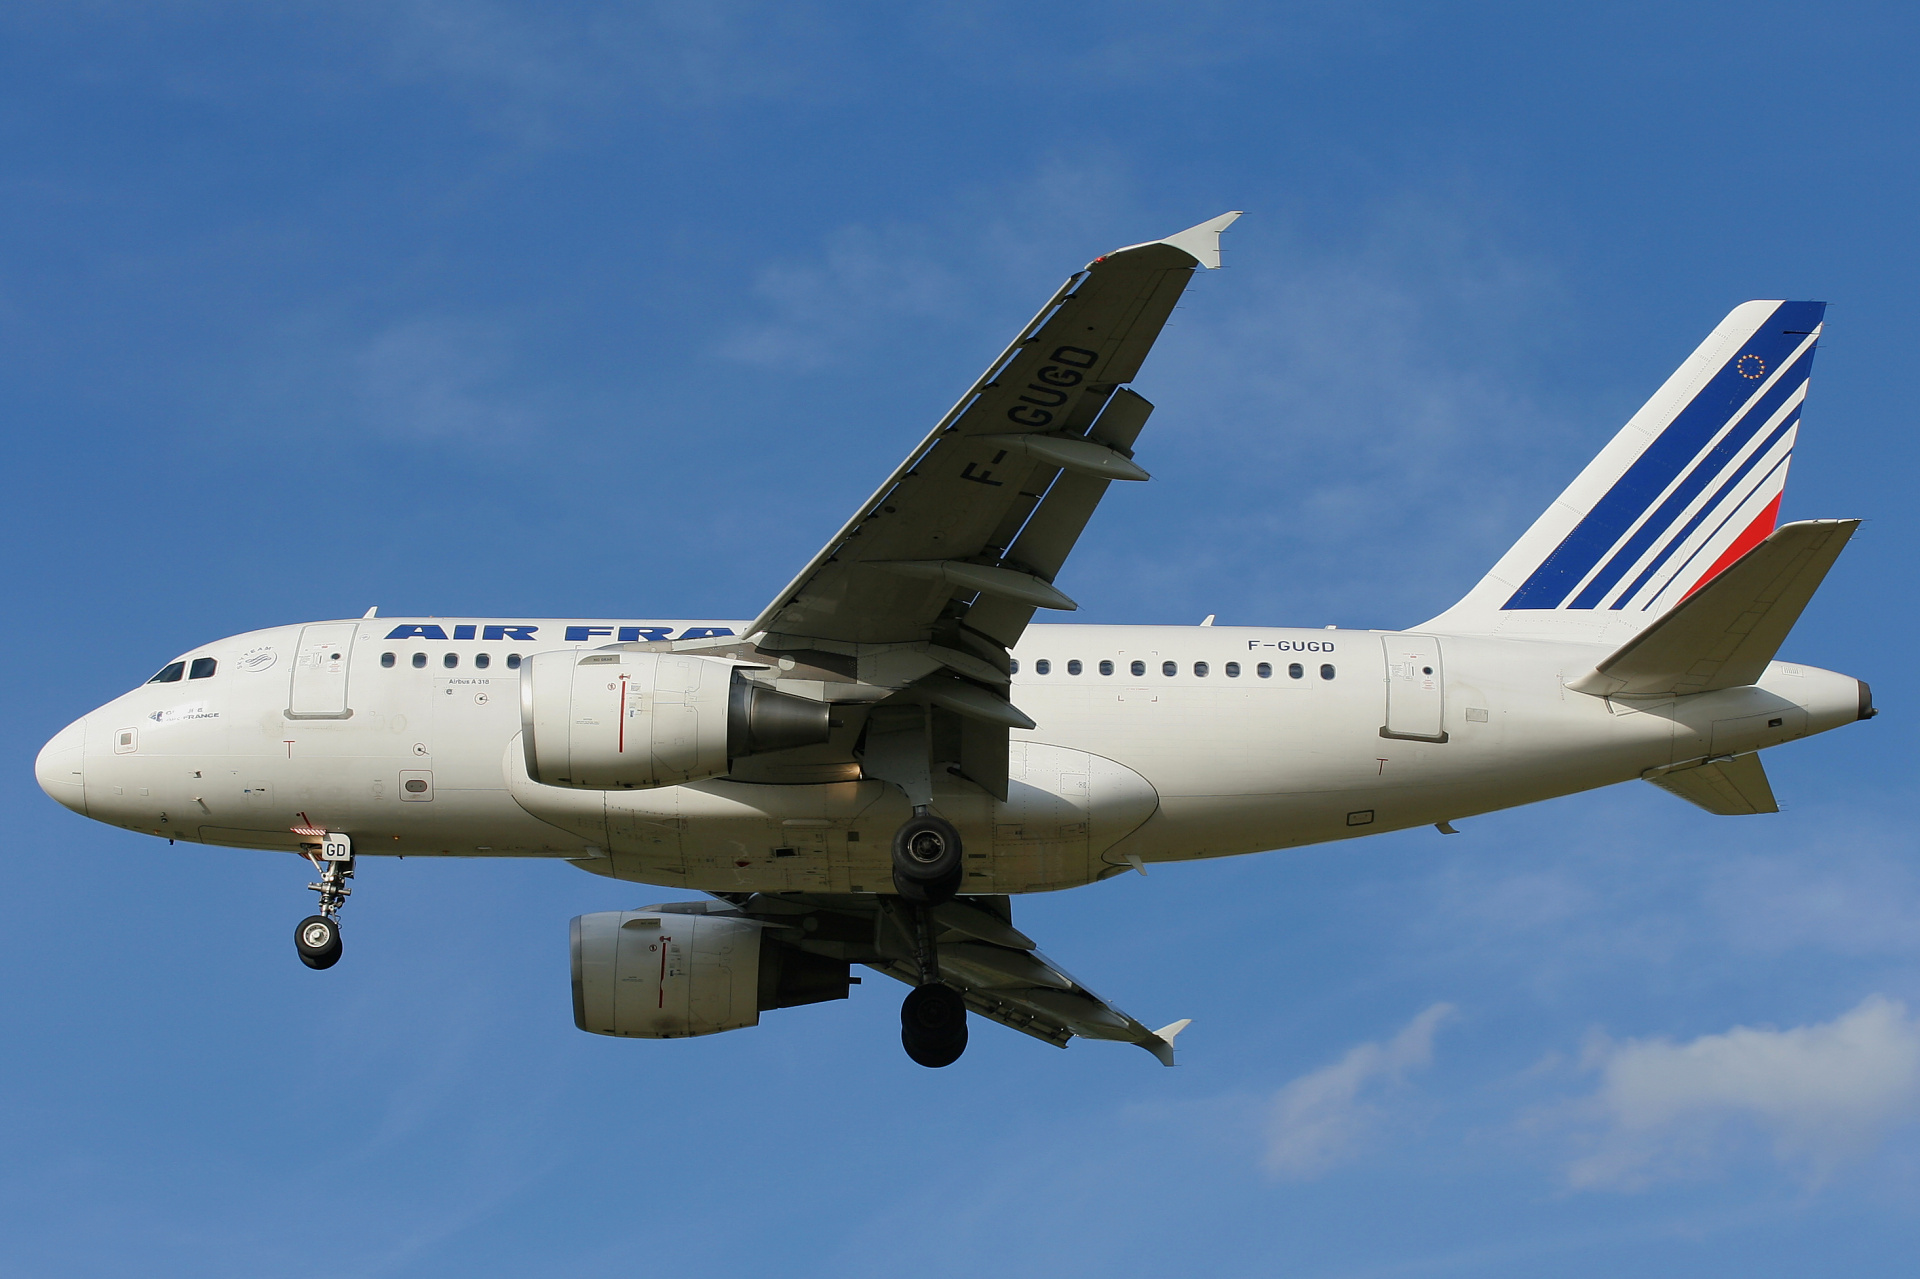 F-GUGD (Aircraft » EPWA Spotting » Airbus A318-100 » Air France)